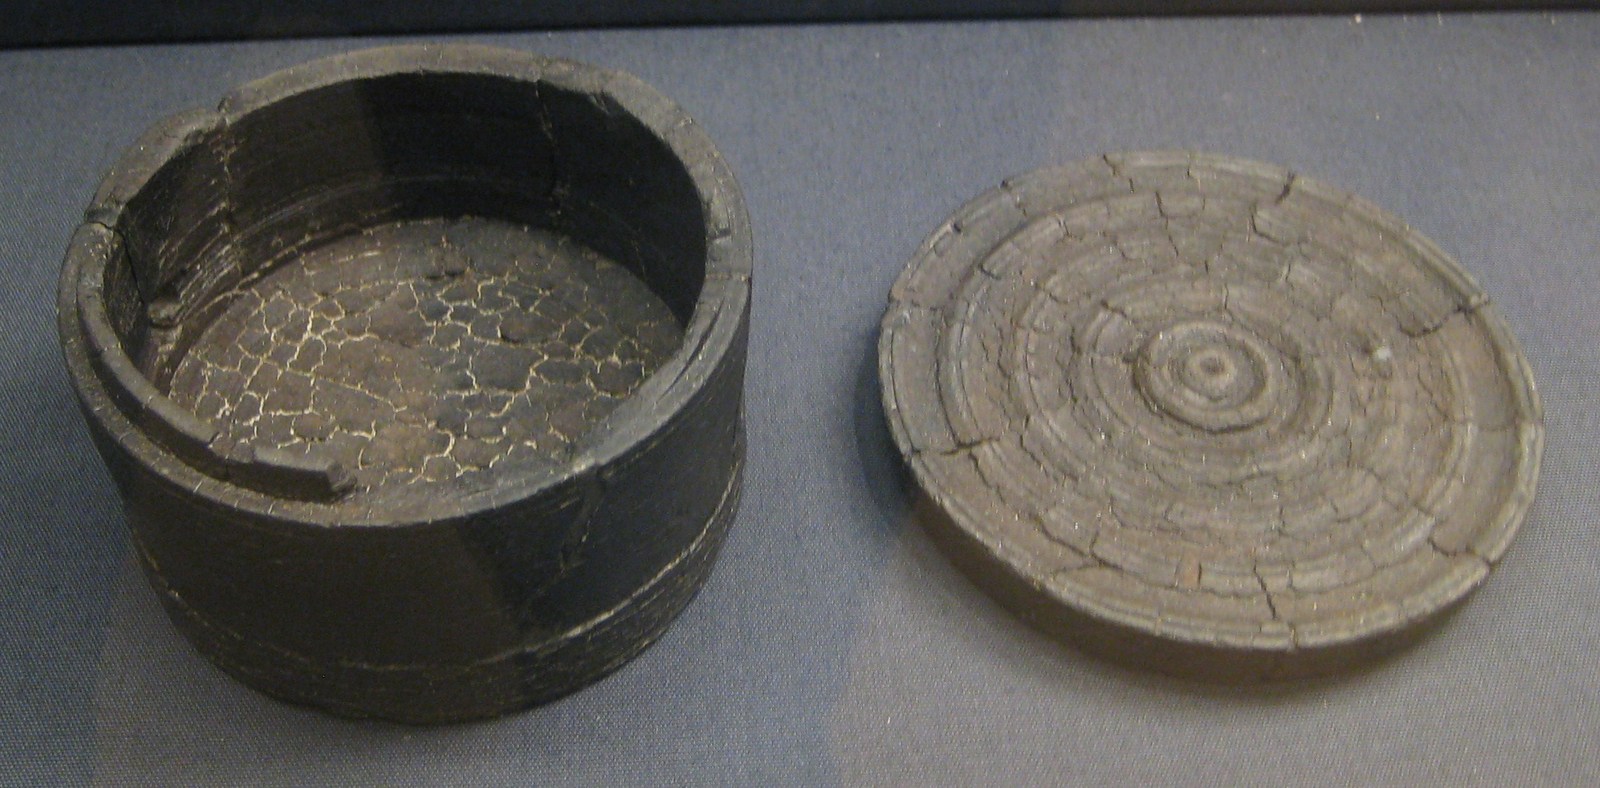 Treasure from Thetford - Archeology, Treasure, The Roman Empire, Jewelcrafting, Decoration, hidden treasures, Longpost